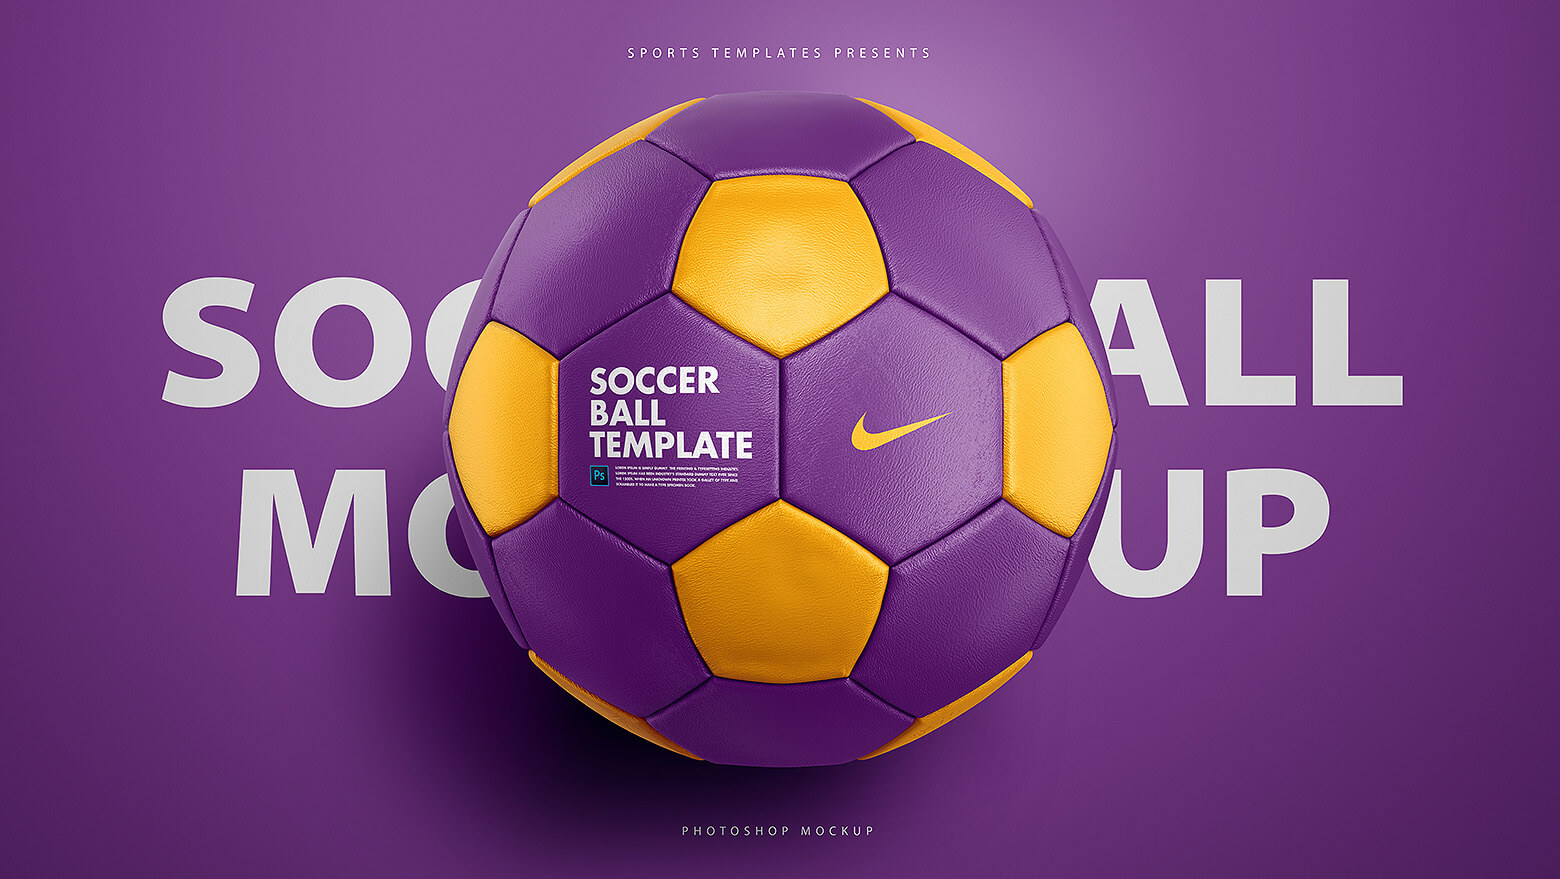 dribbble-soccer-football-ball-mockup-template-jpg-by-ali-rahmoun